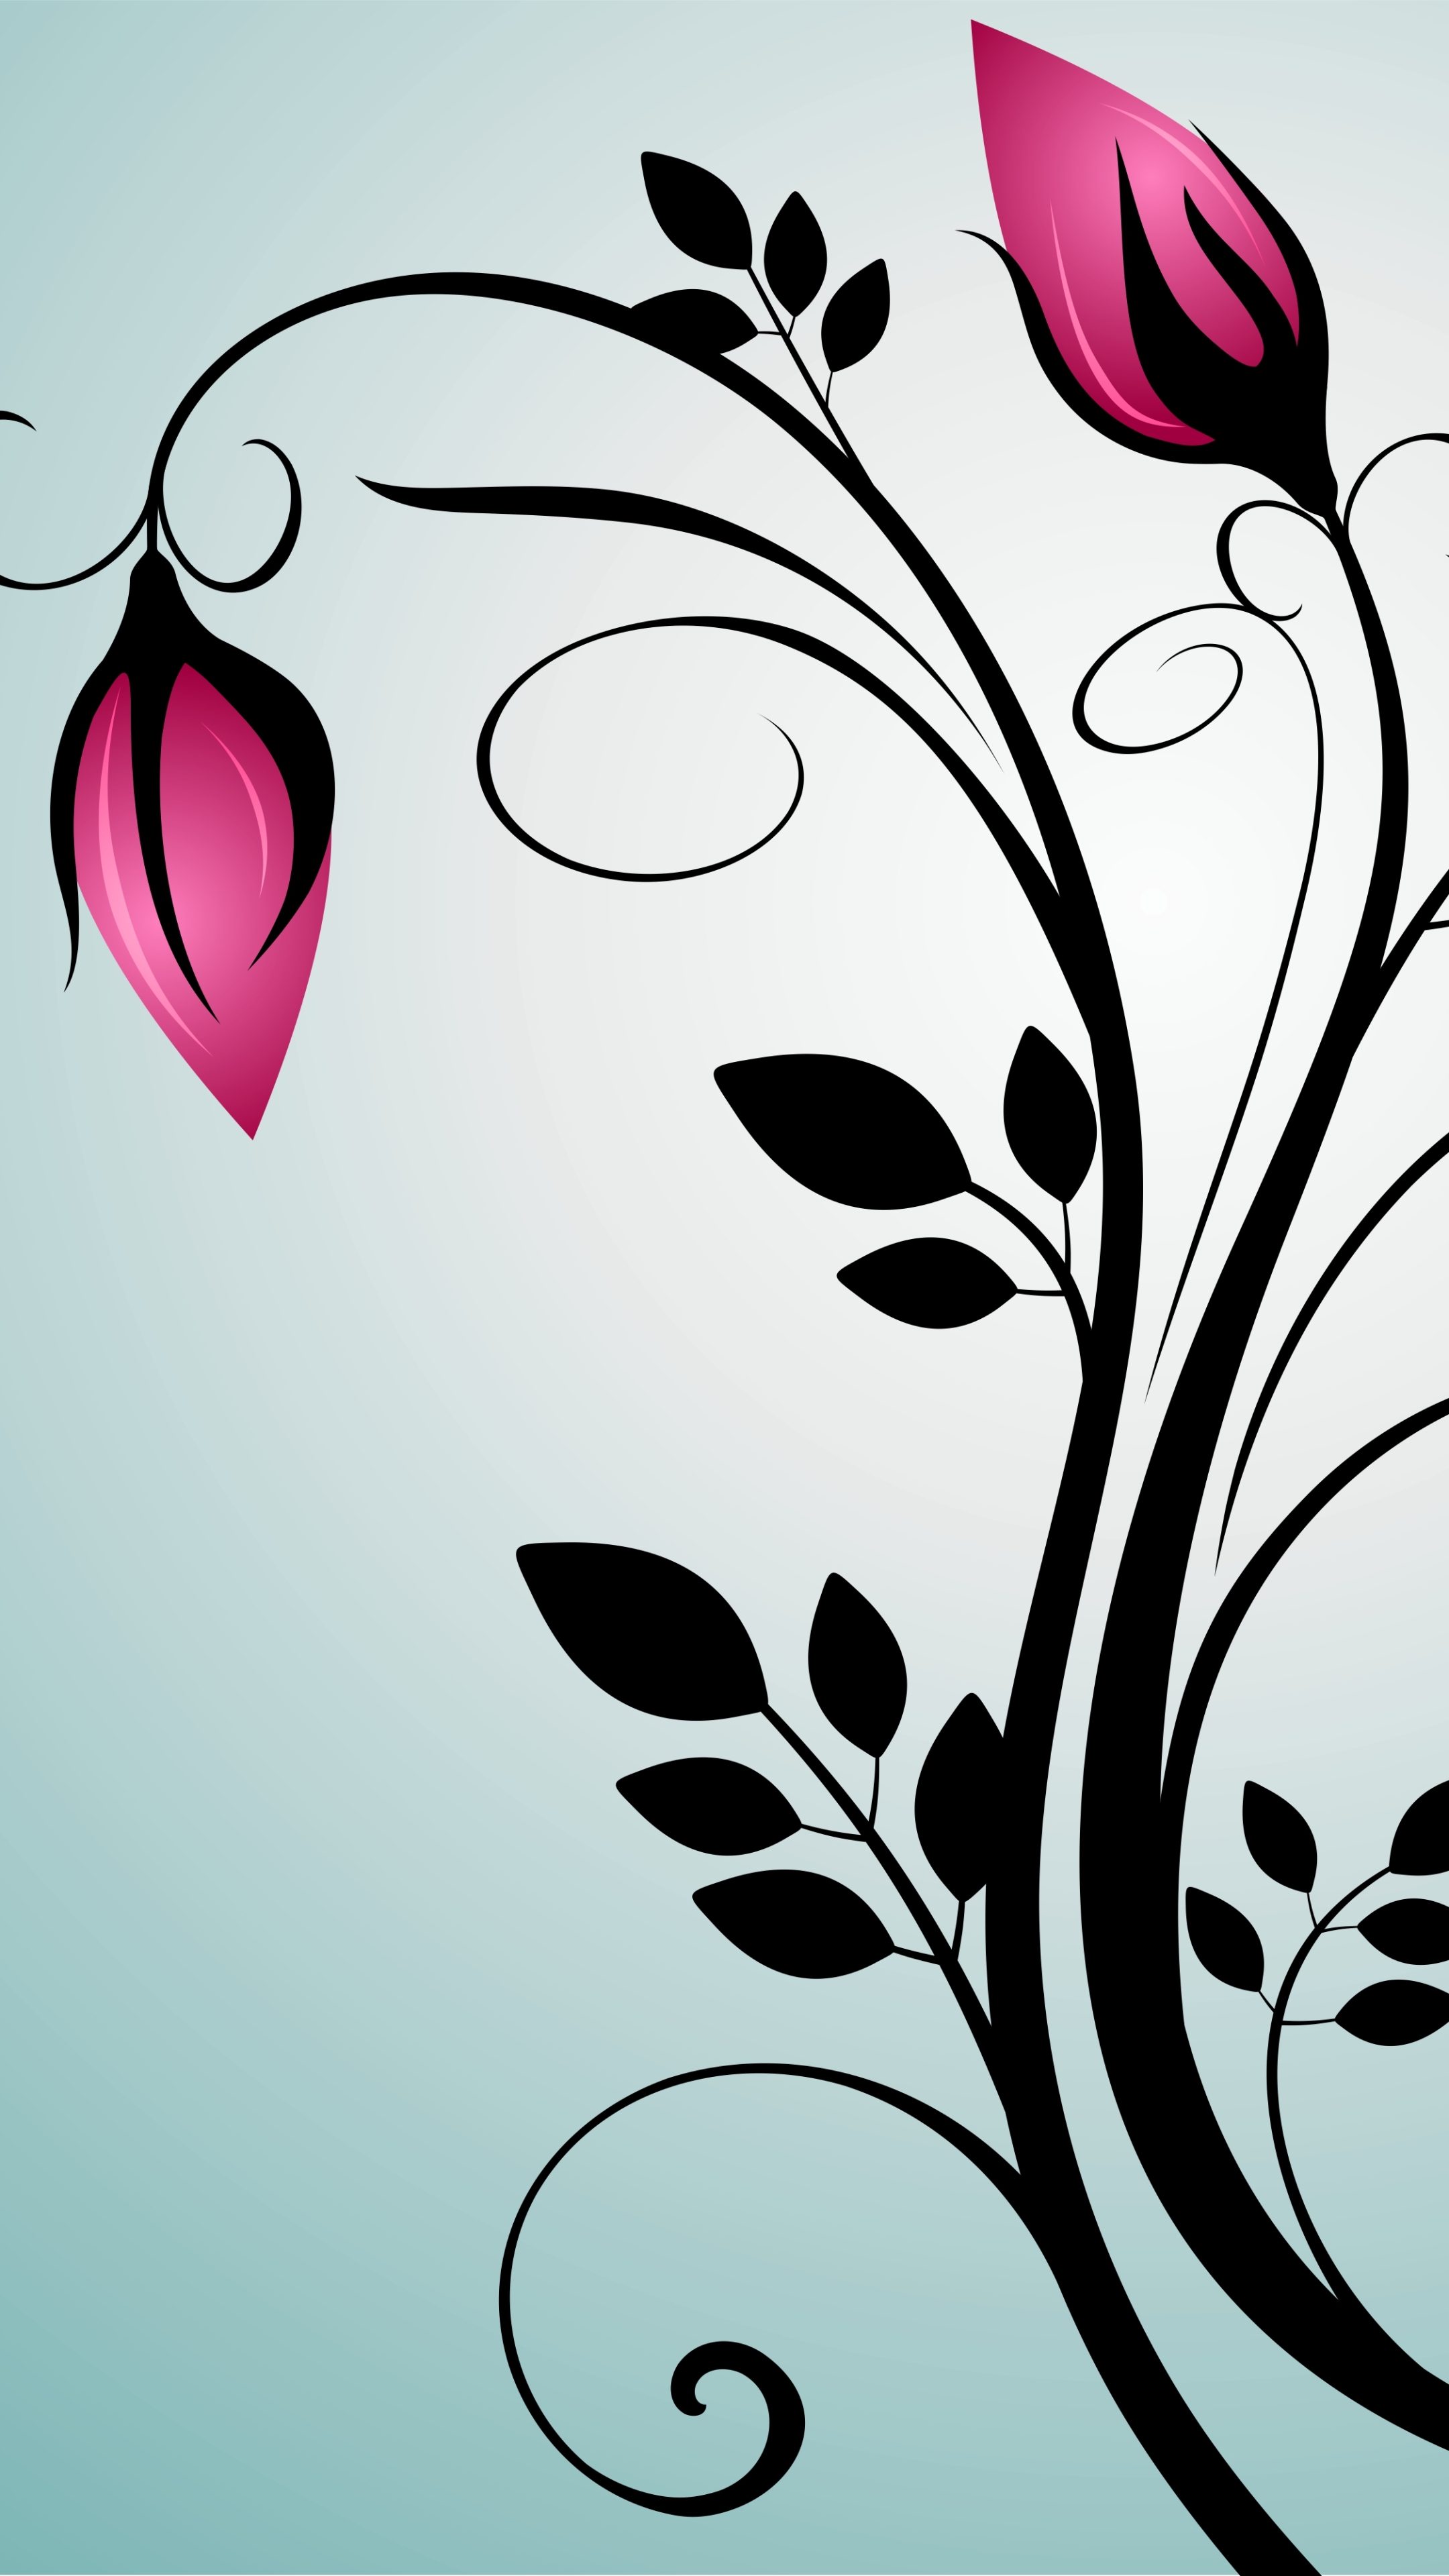 Artistic Flower Phone Wallpaper